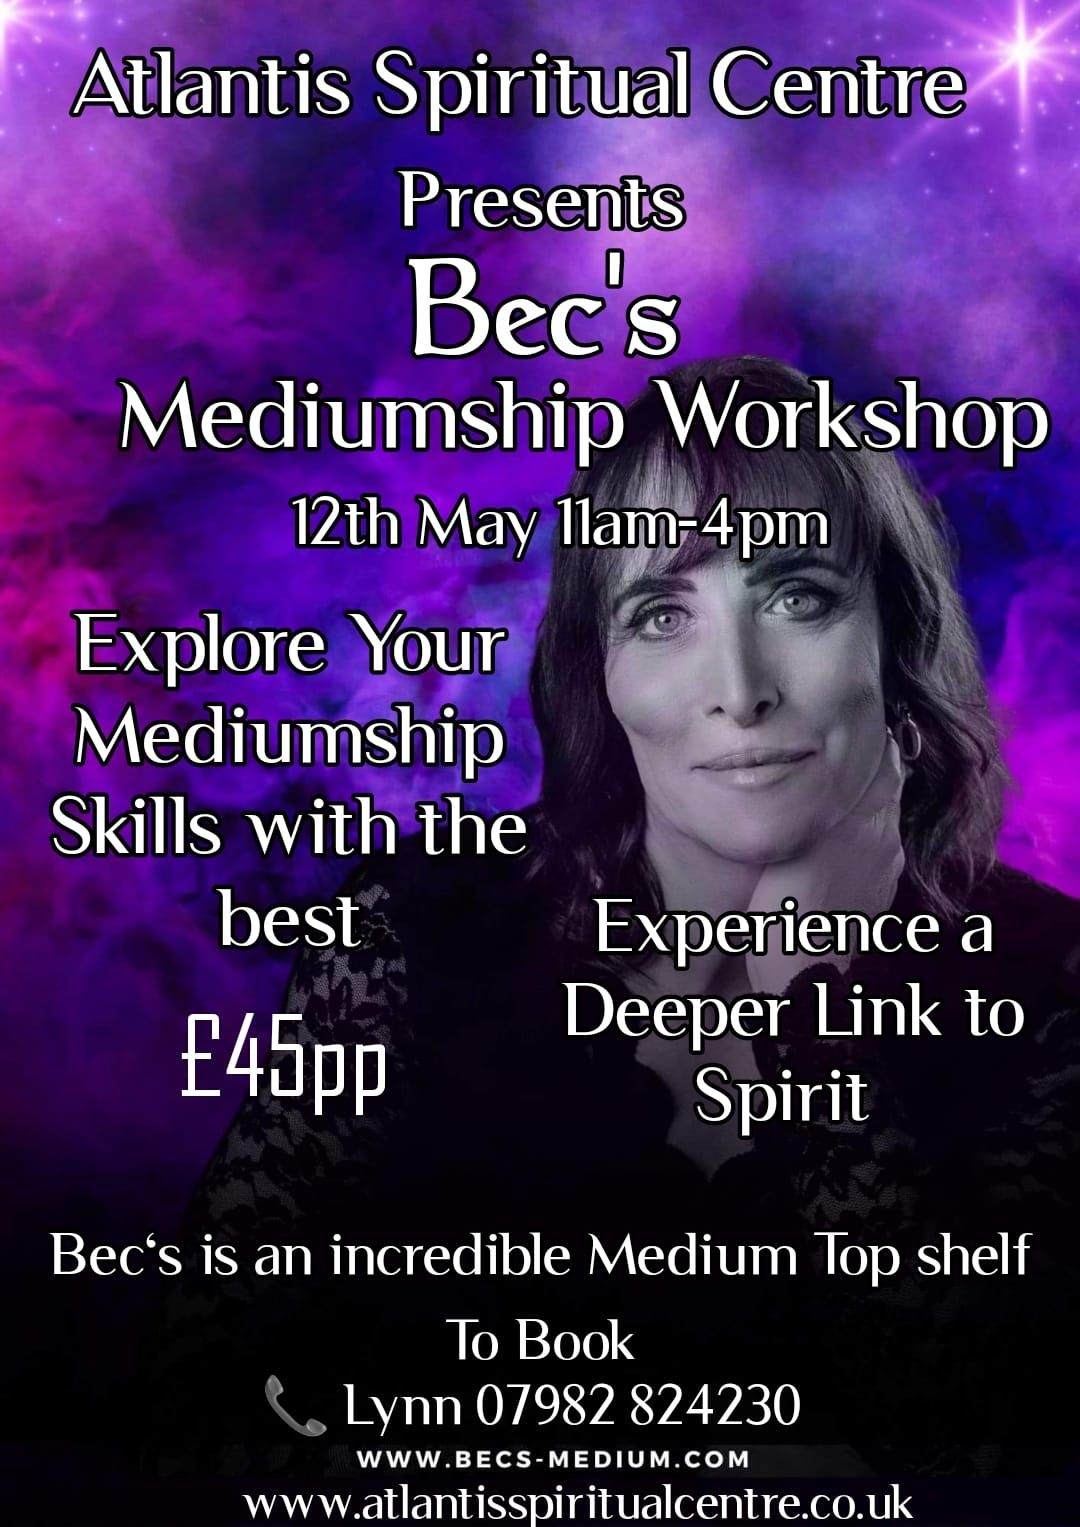 Mediumship Workshop with Becs